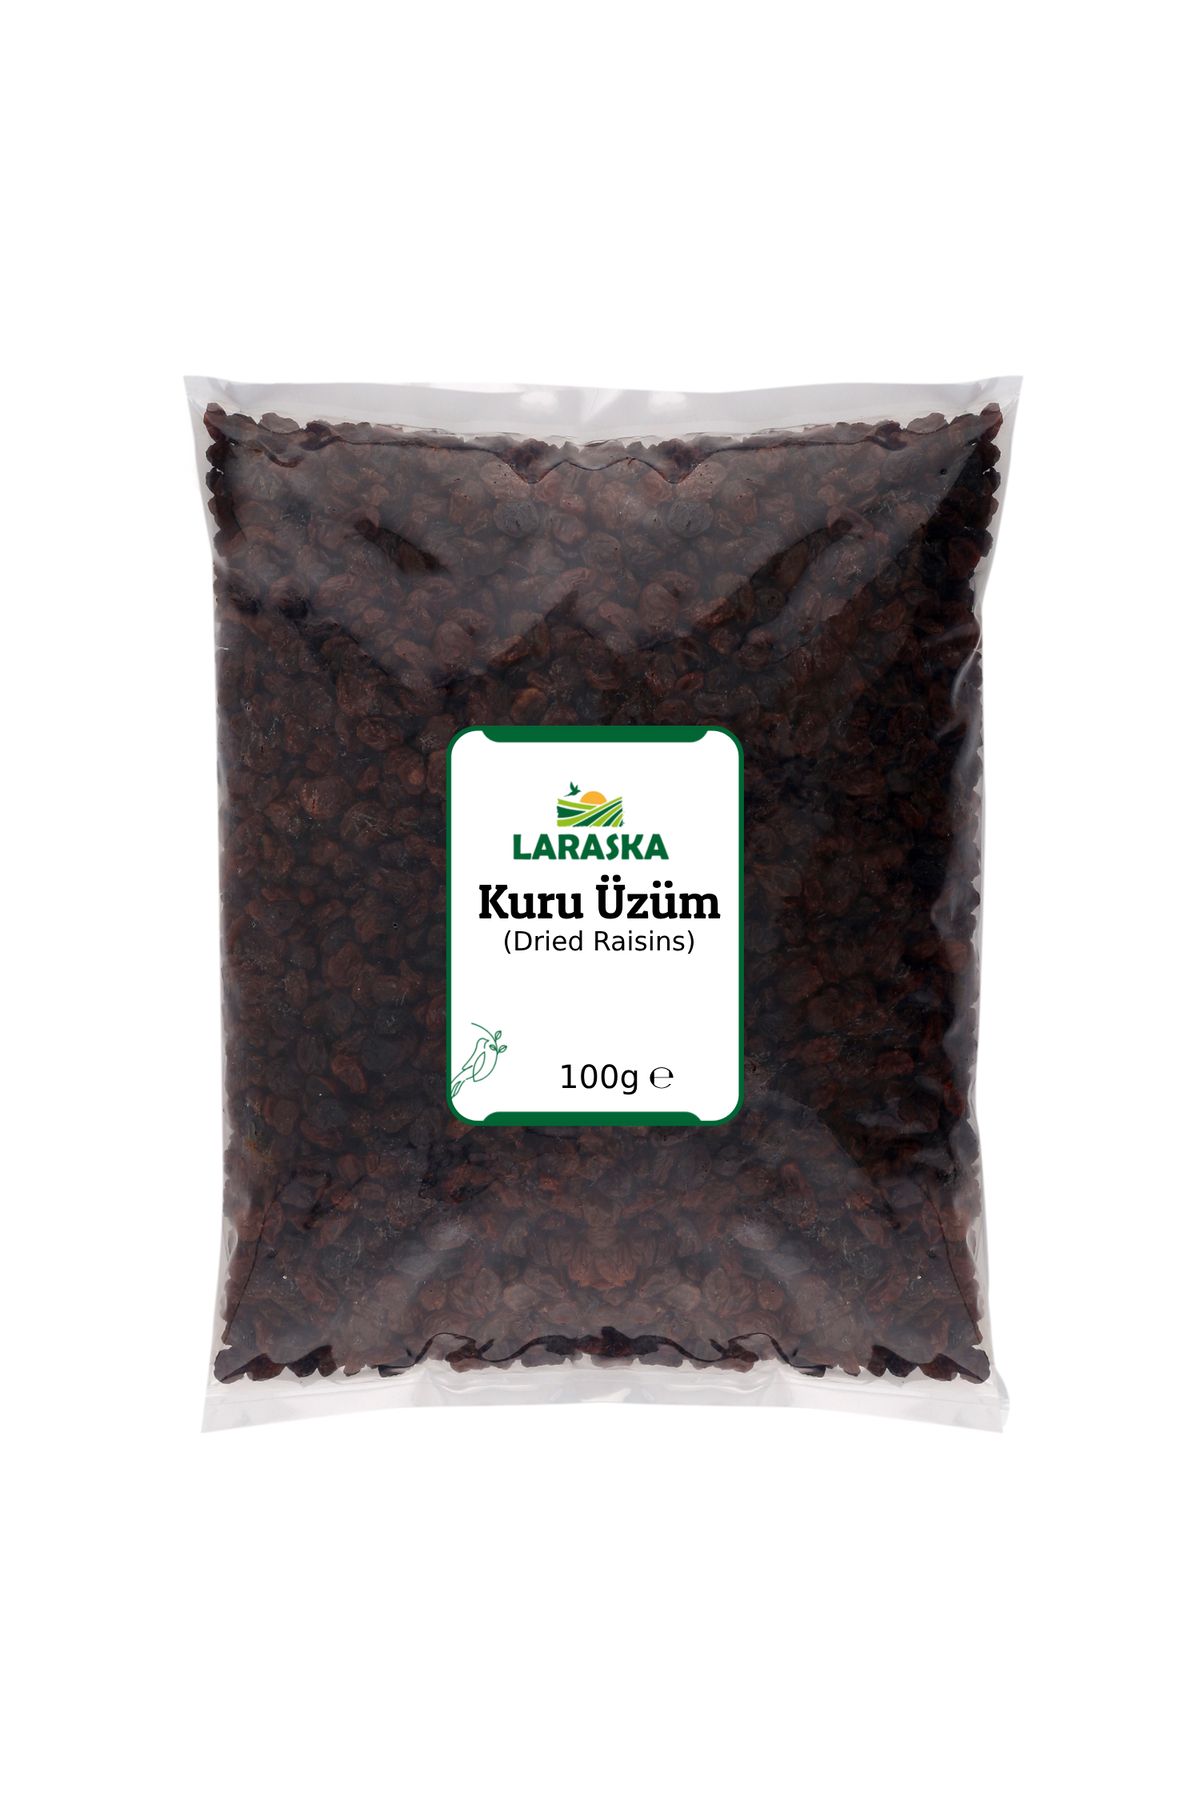 Laraska Kuru Üzüm 100g - Dried Raisins 100g